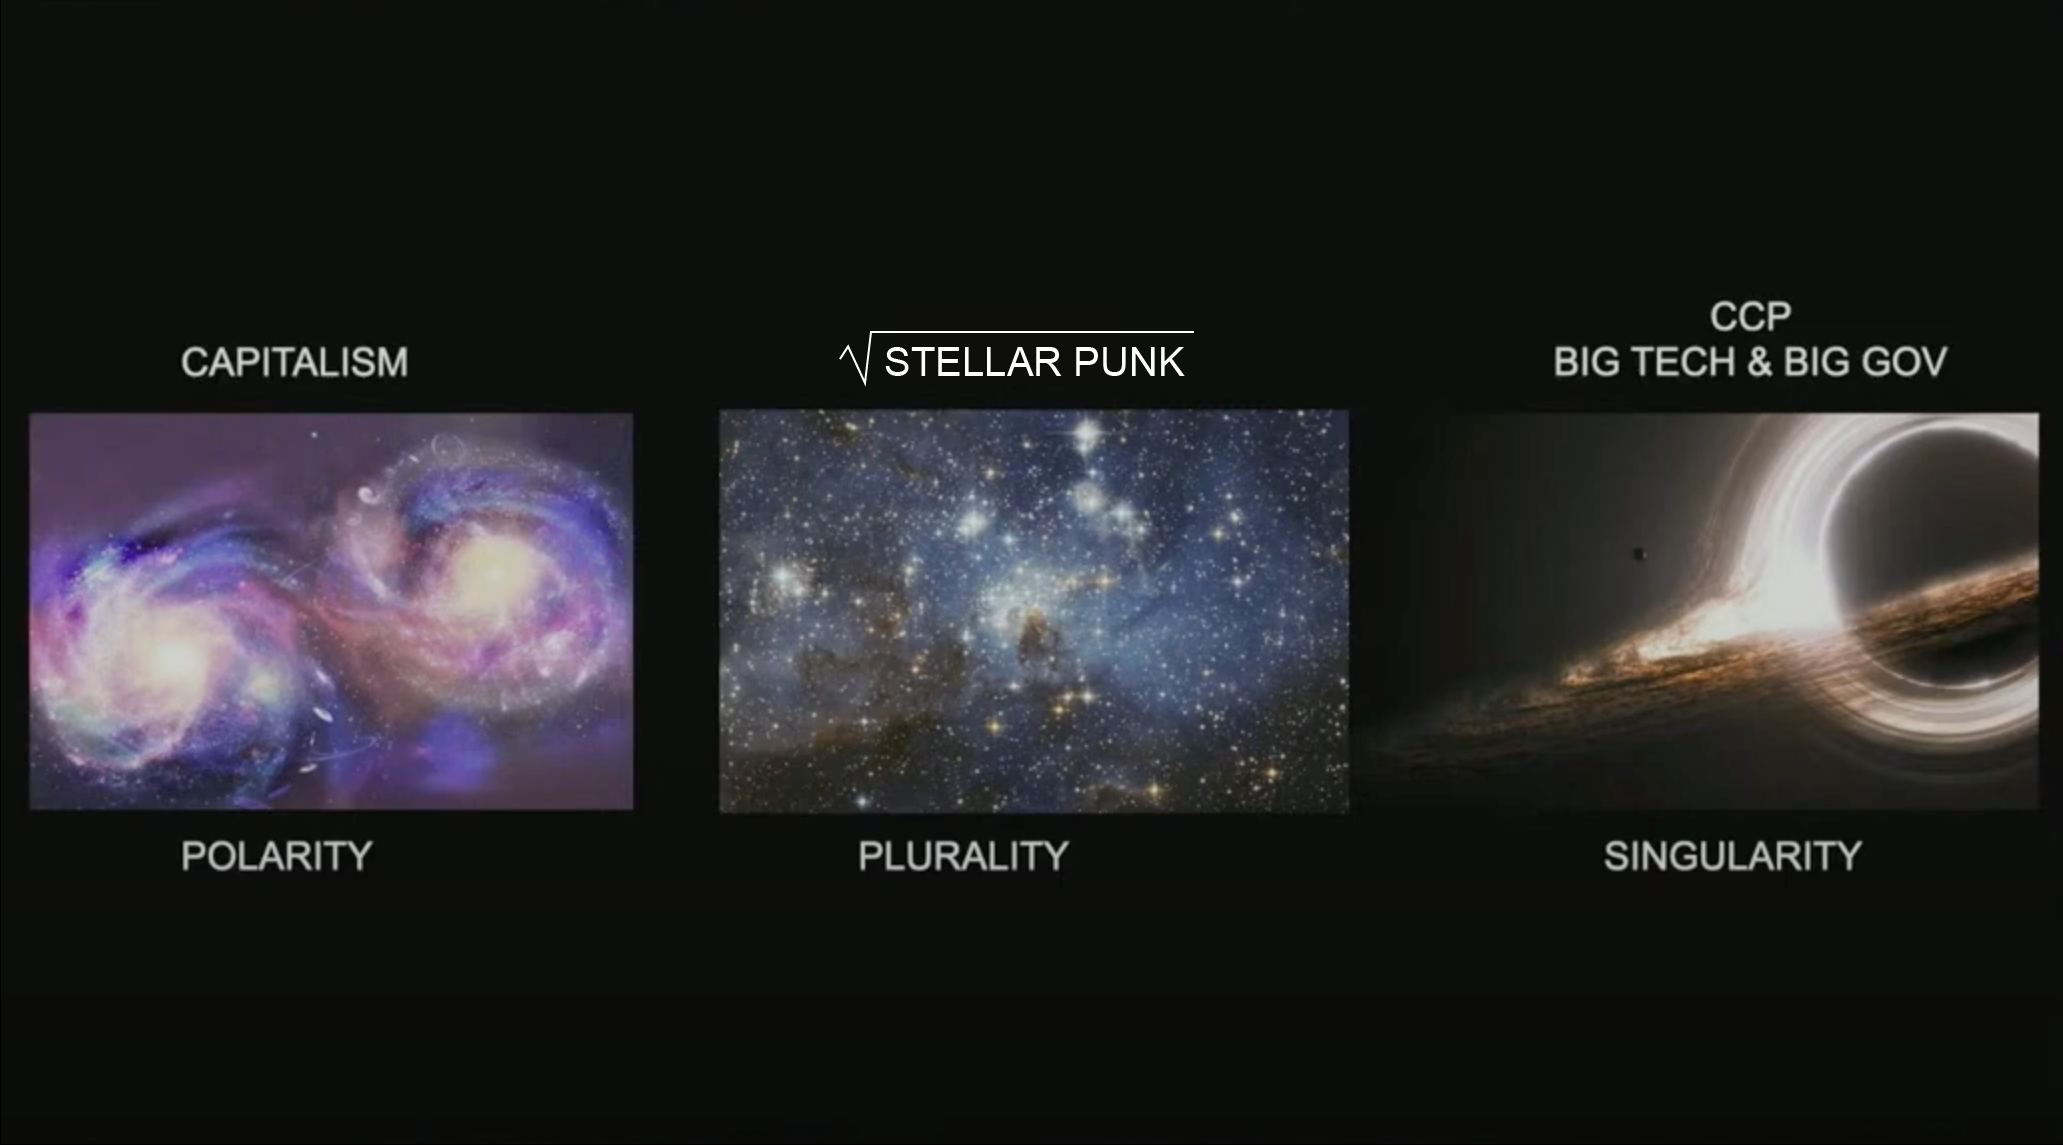 Stellar punk is plurality.